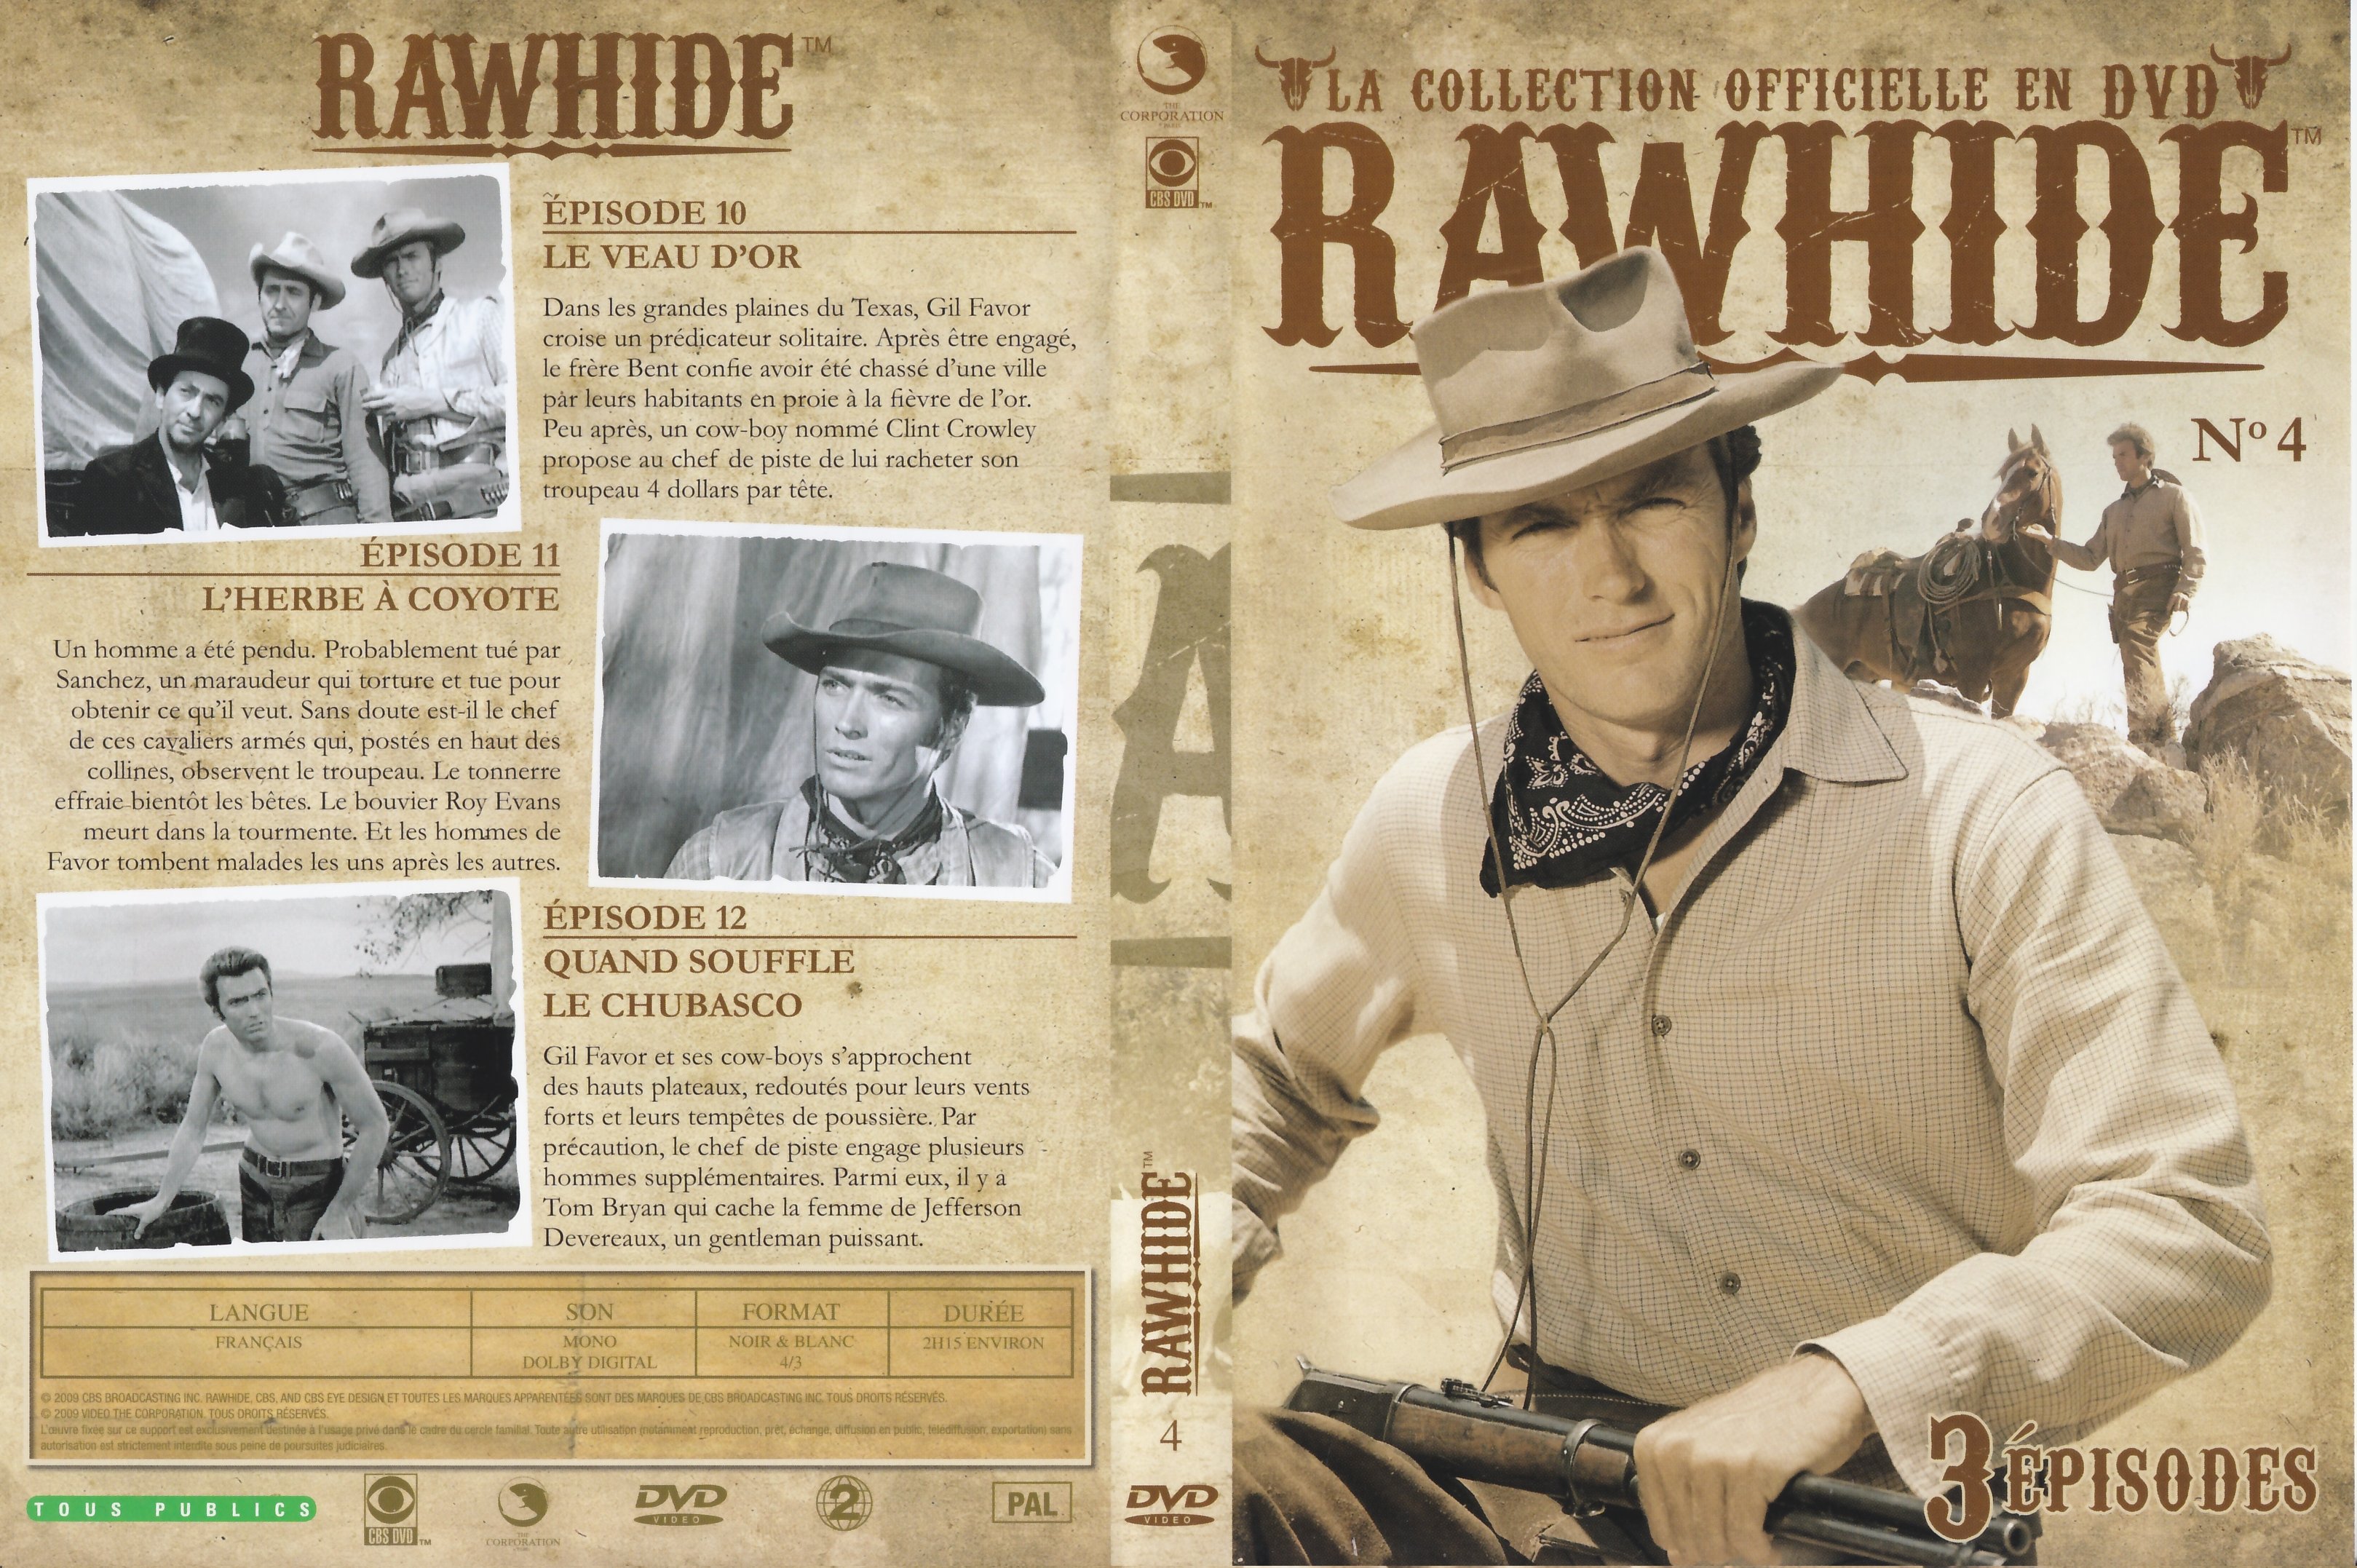 Jaquette DVD Rawhide DVD 04